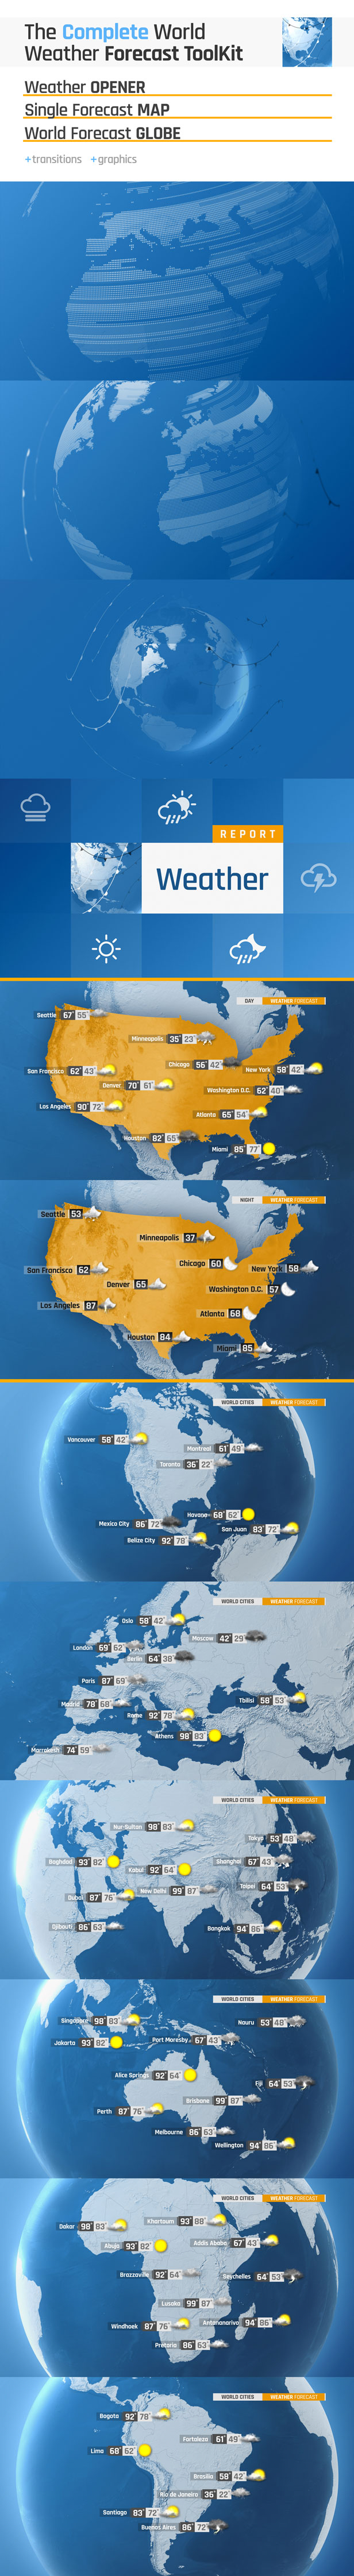 AE模板|世界各地天气预报栏目包装制作工具包 The Complete World Weather Forecast ToolKit